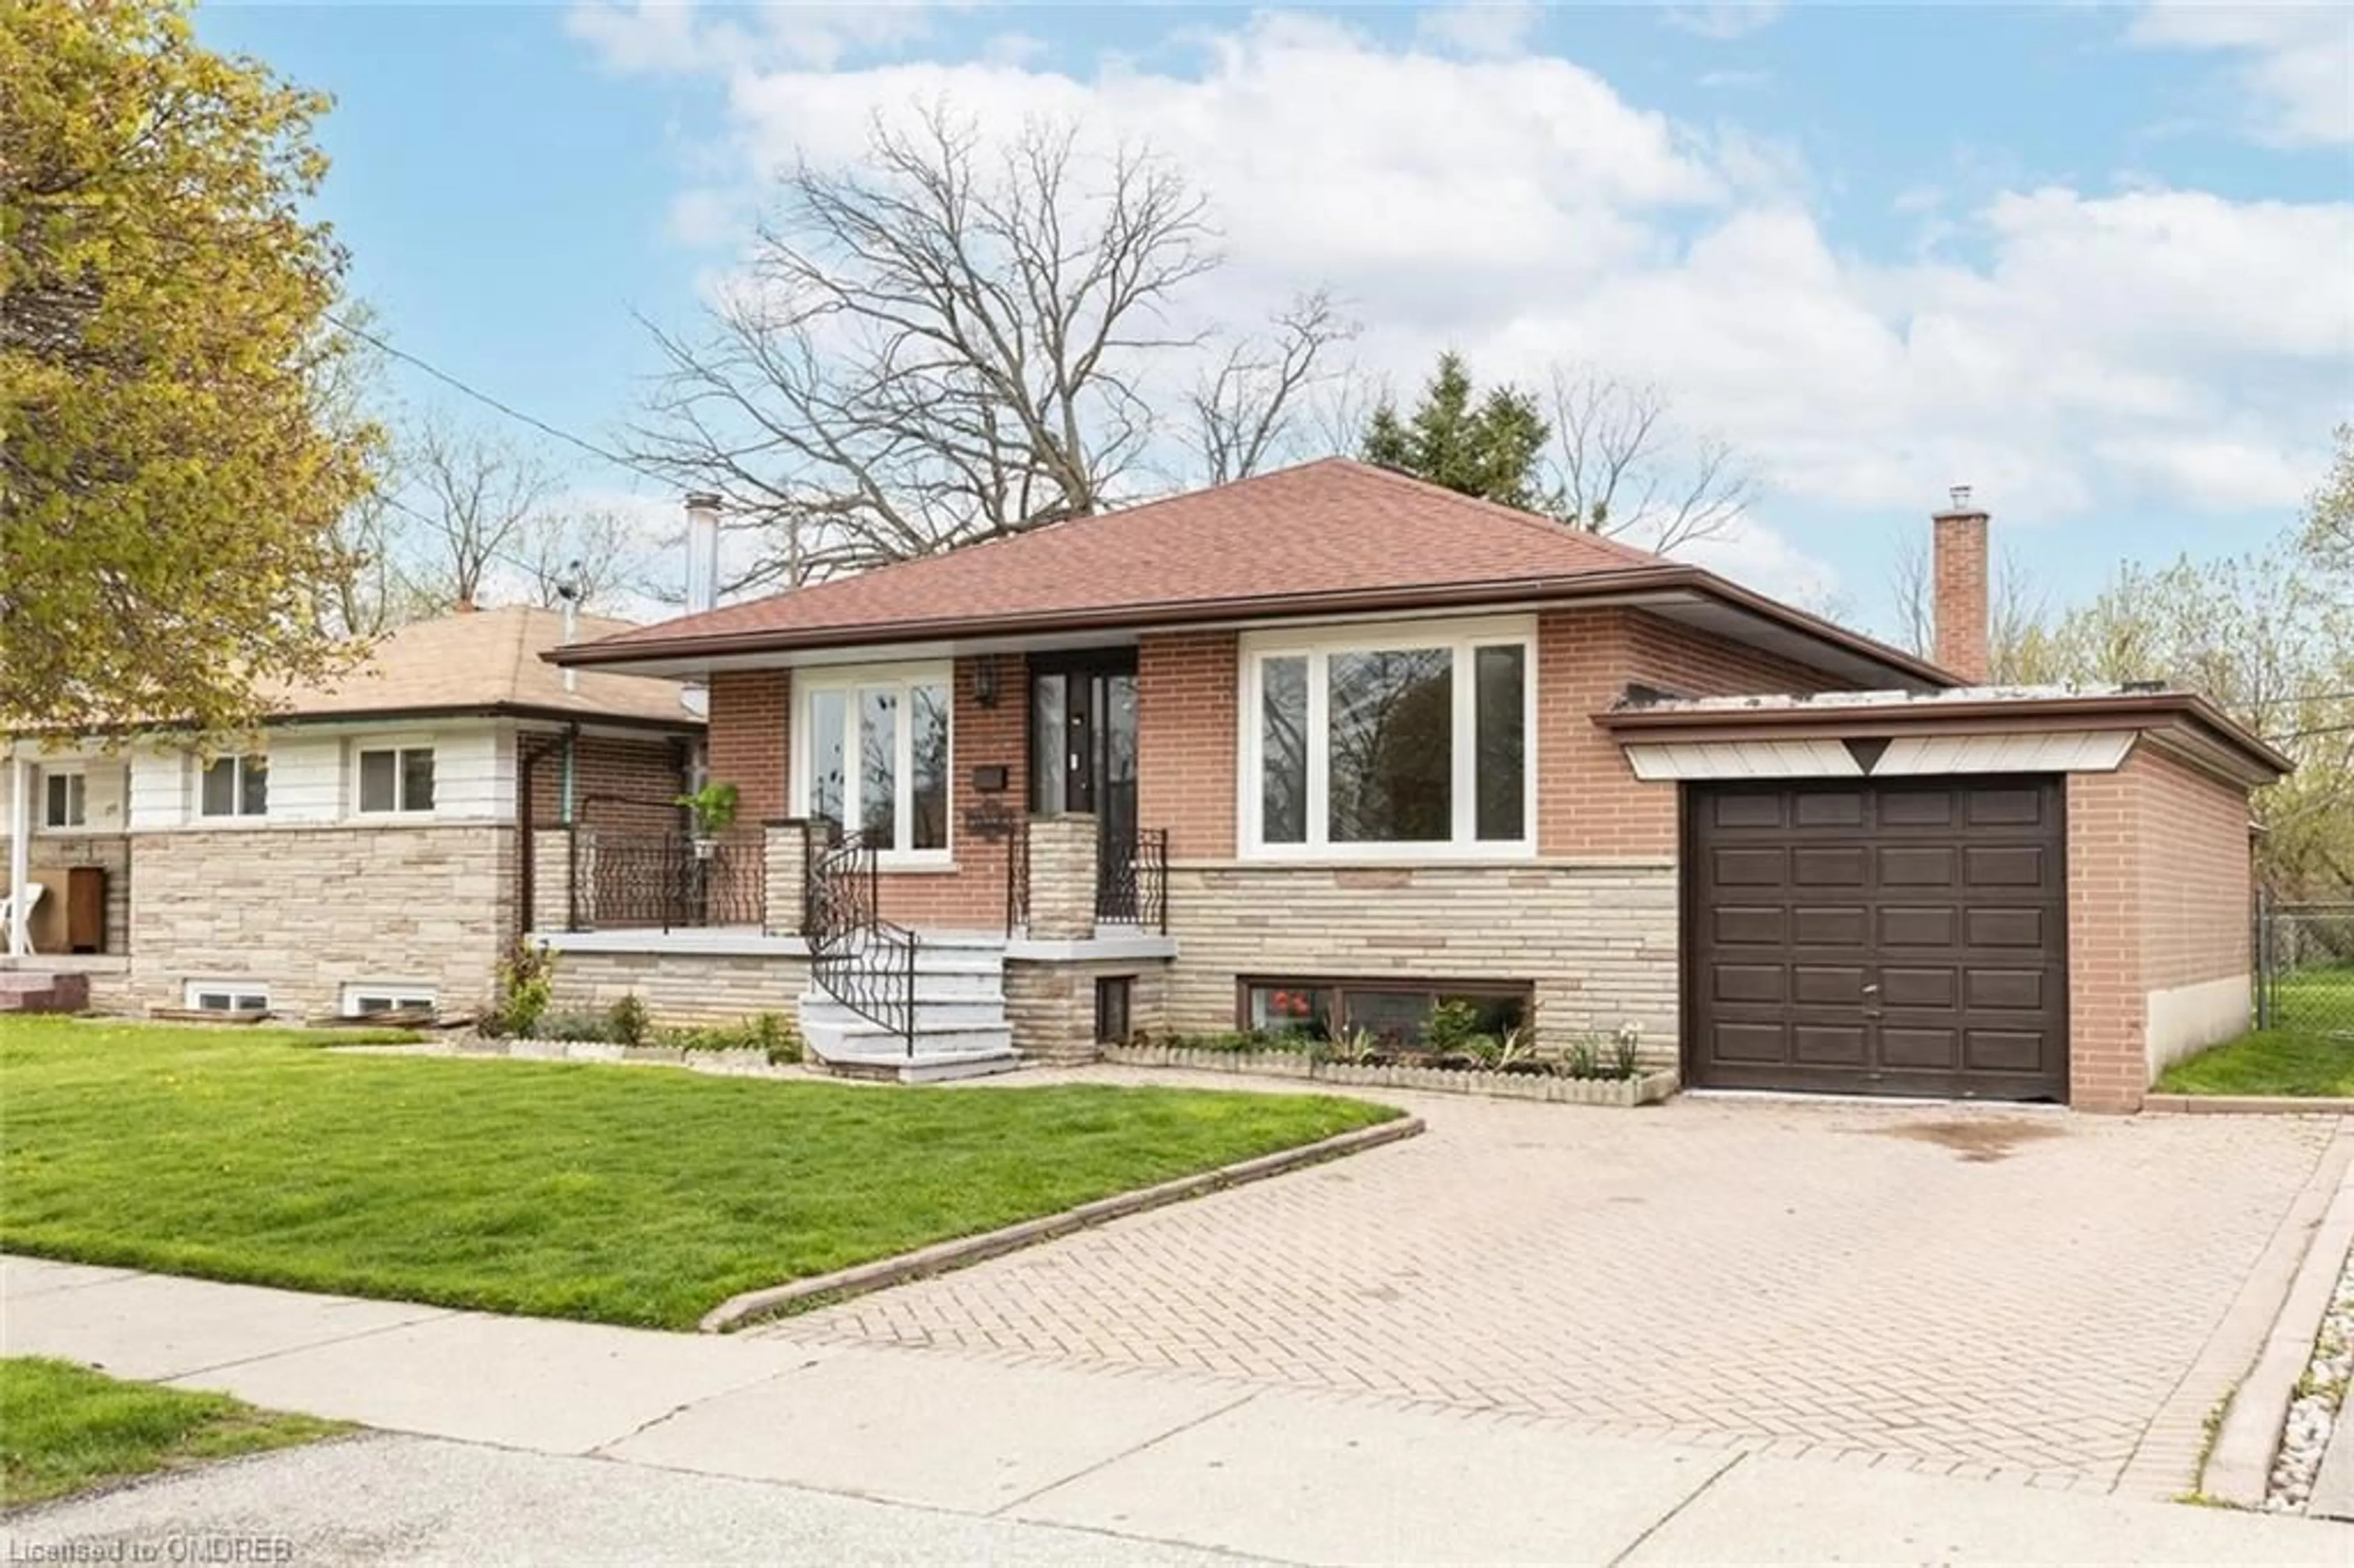 Home with brick exterior material for 253 Thistledown Blvd, Toronto Ontario M9V 1K6